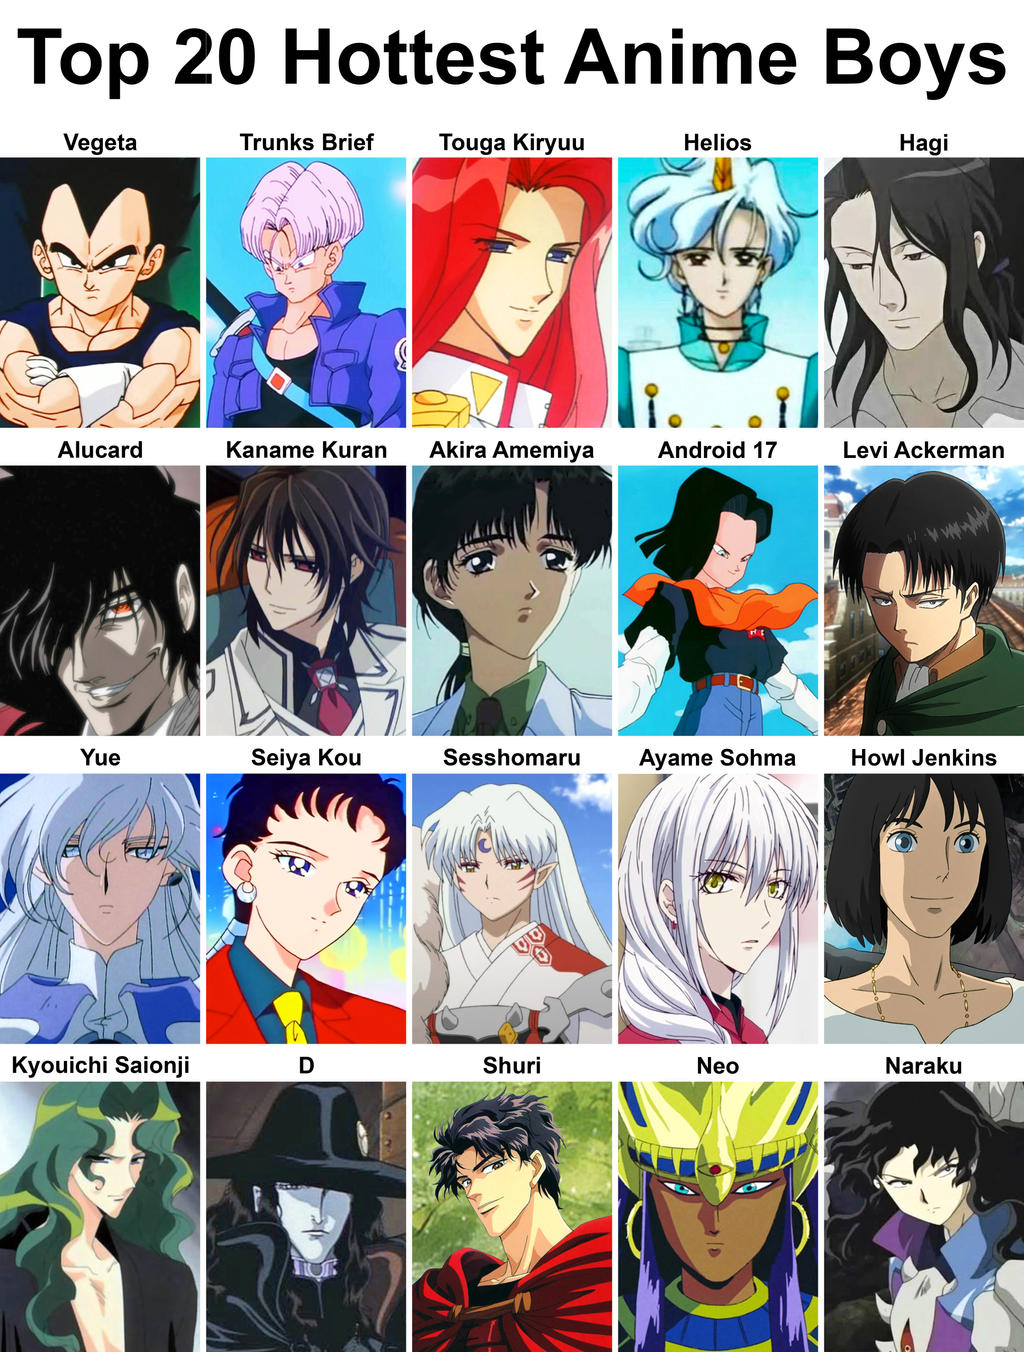 Top 20 Hottest Anime Boys - My Picks by SilverBuller on DeviantArt